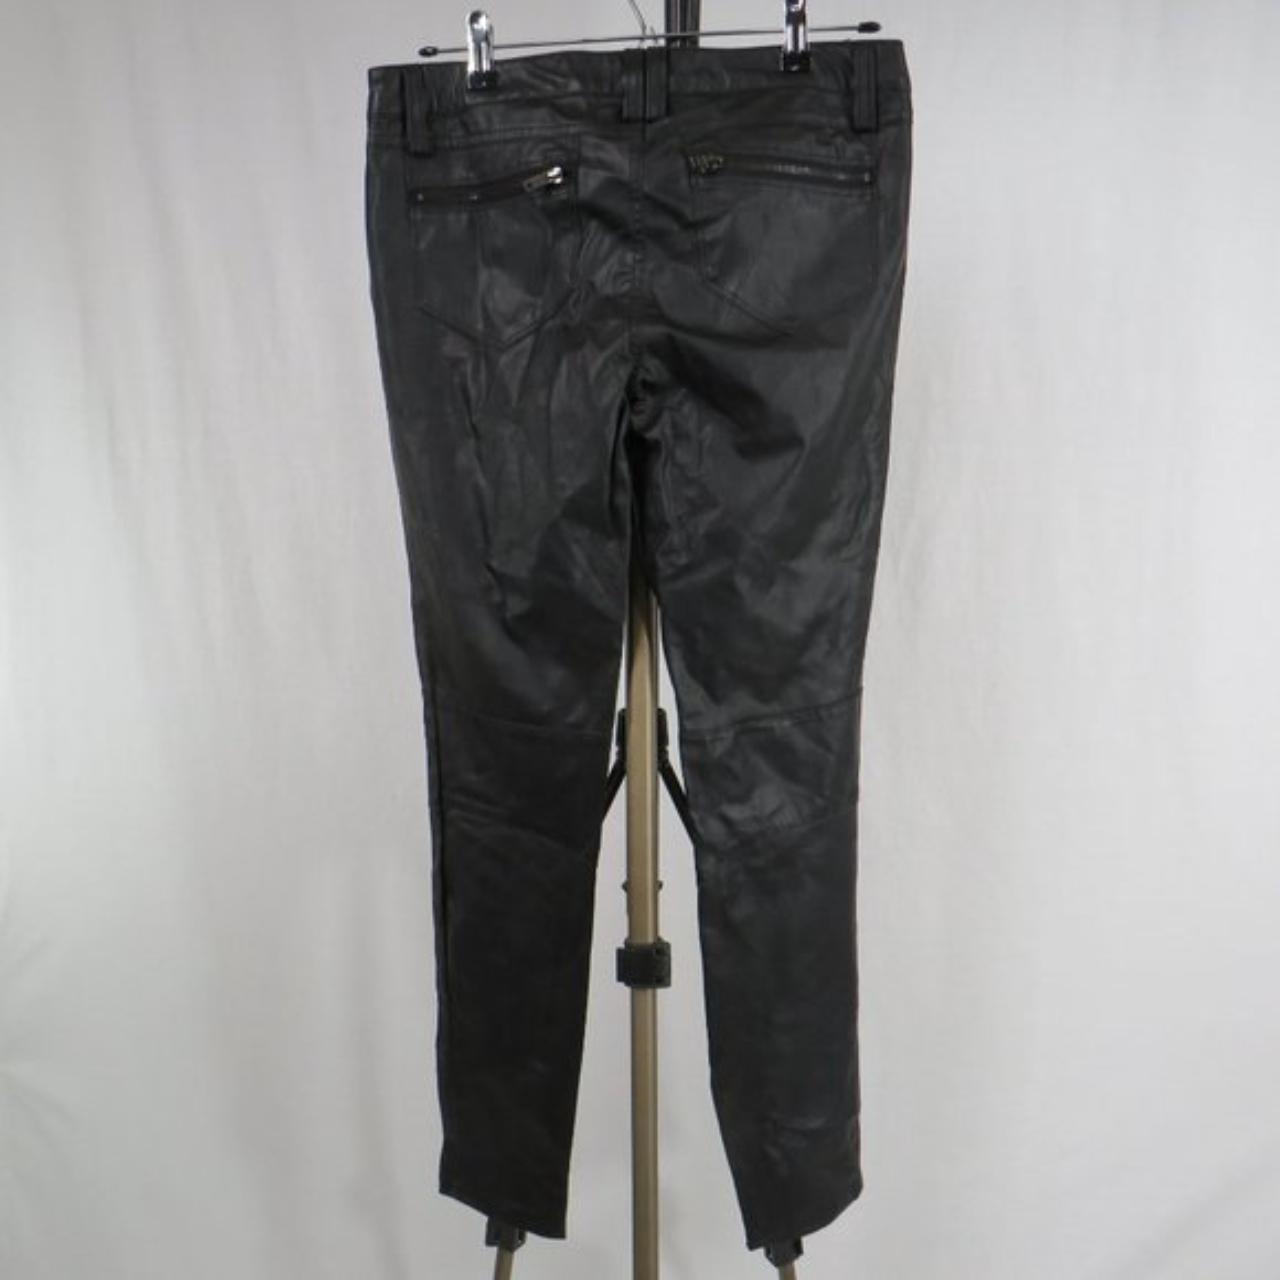 Boutique XXI black leather pants with classic... - Depop